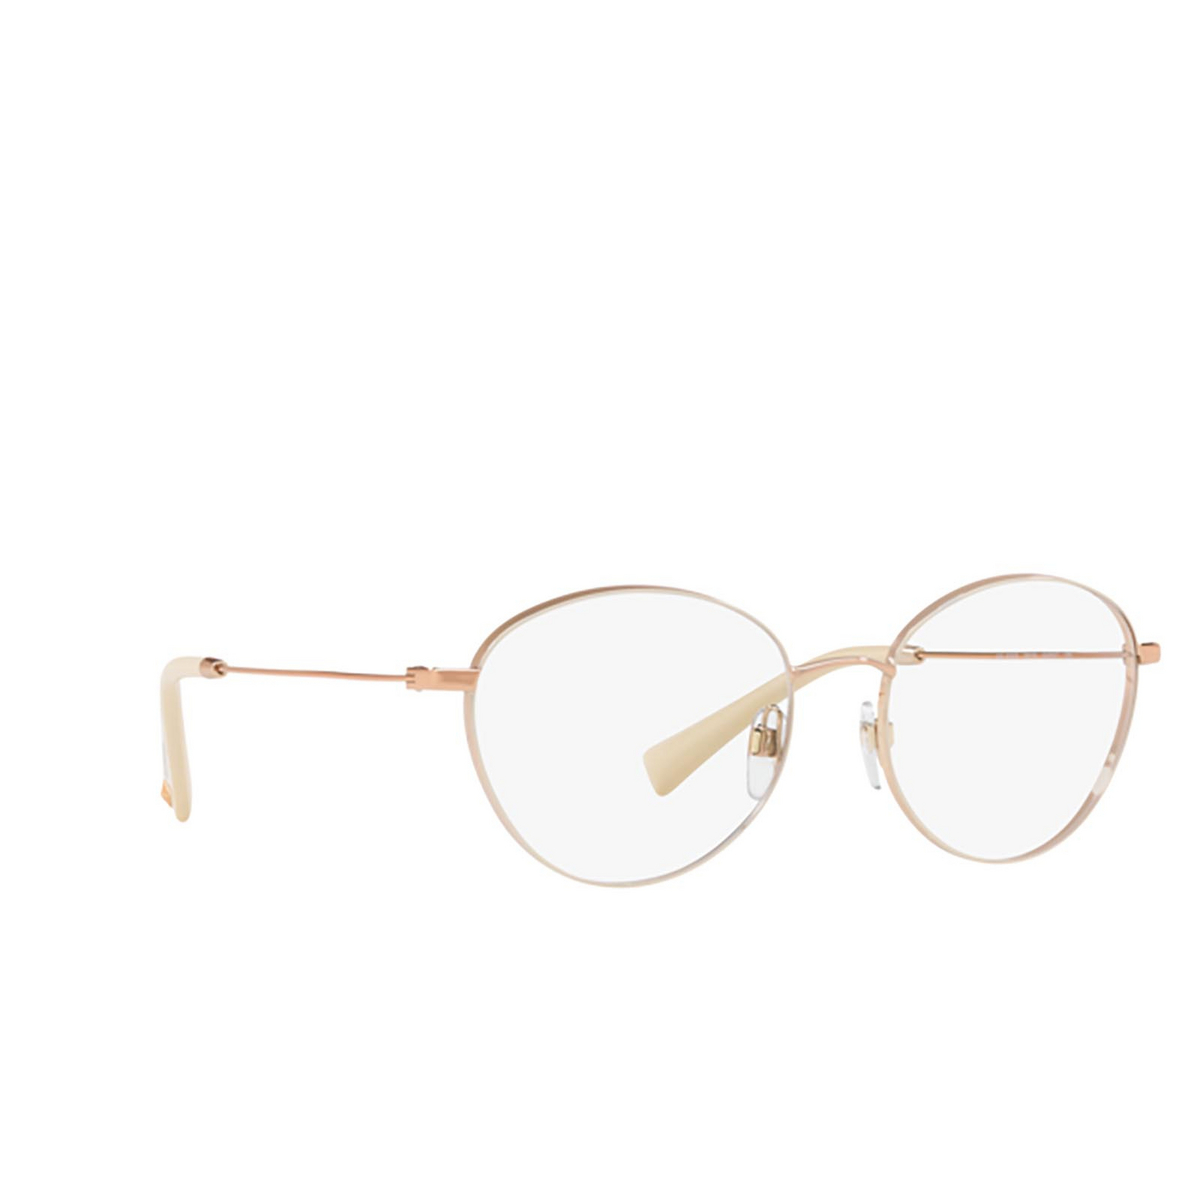 Valentino® Oval Eyeglasses: VA1003 color Rose Gold / Poudre 3013 - three-quarters view.